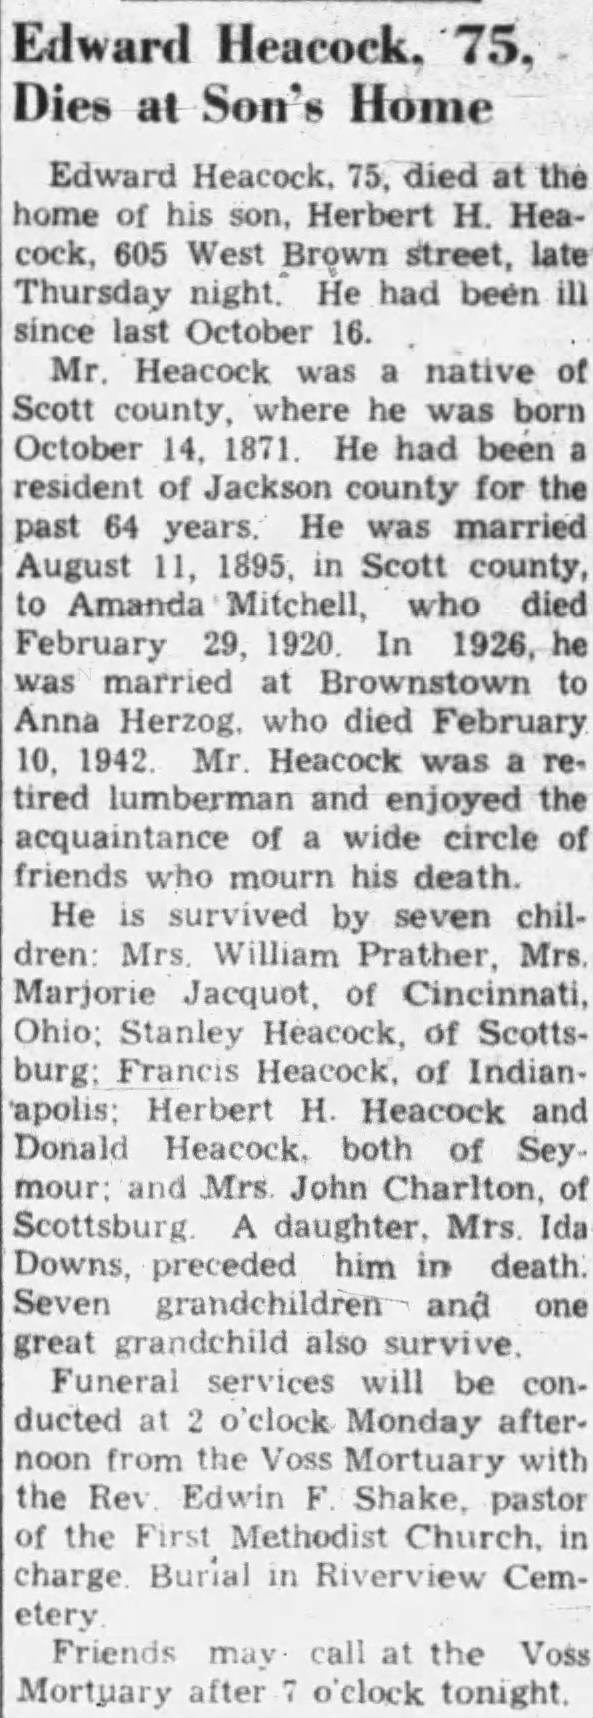 Heacock, Edward
The Tribune(Seymour, Indiana) 28 Feb 1947, Fri, Page 1